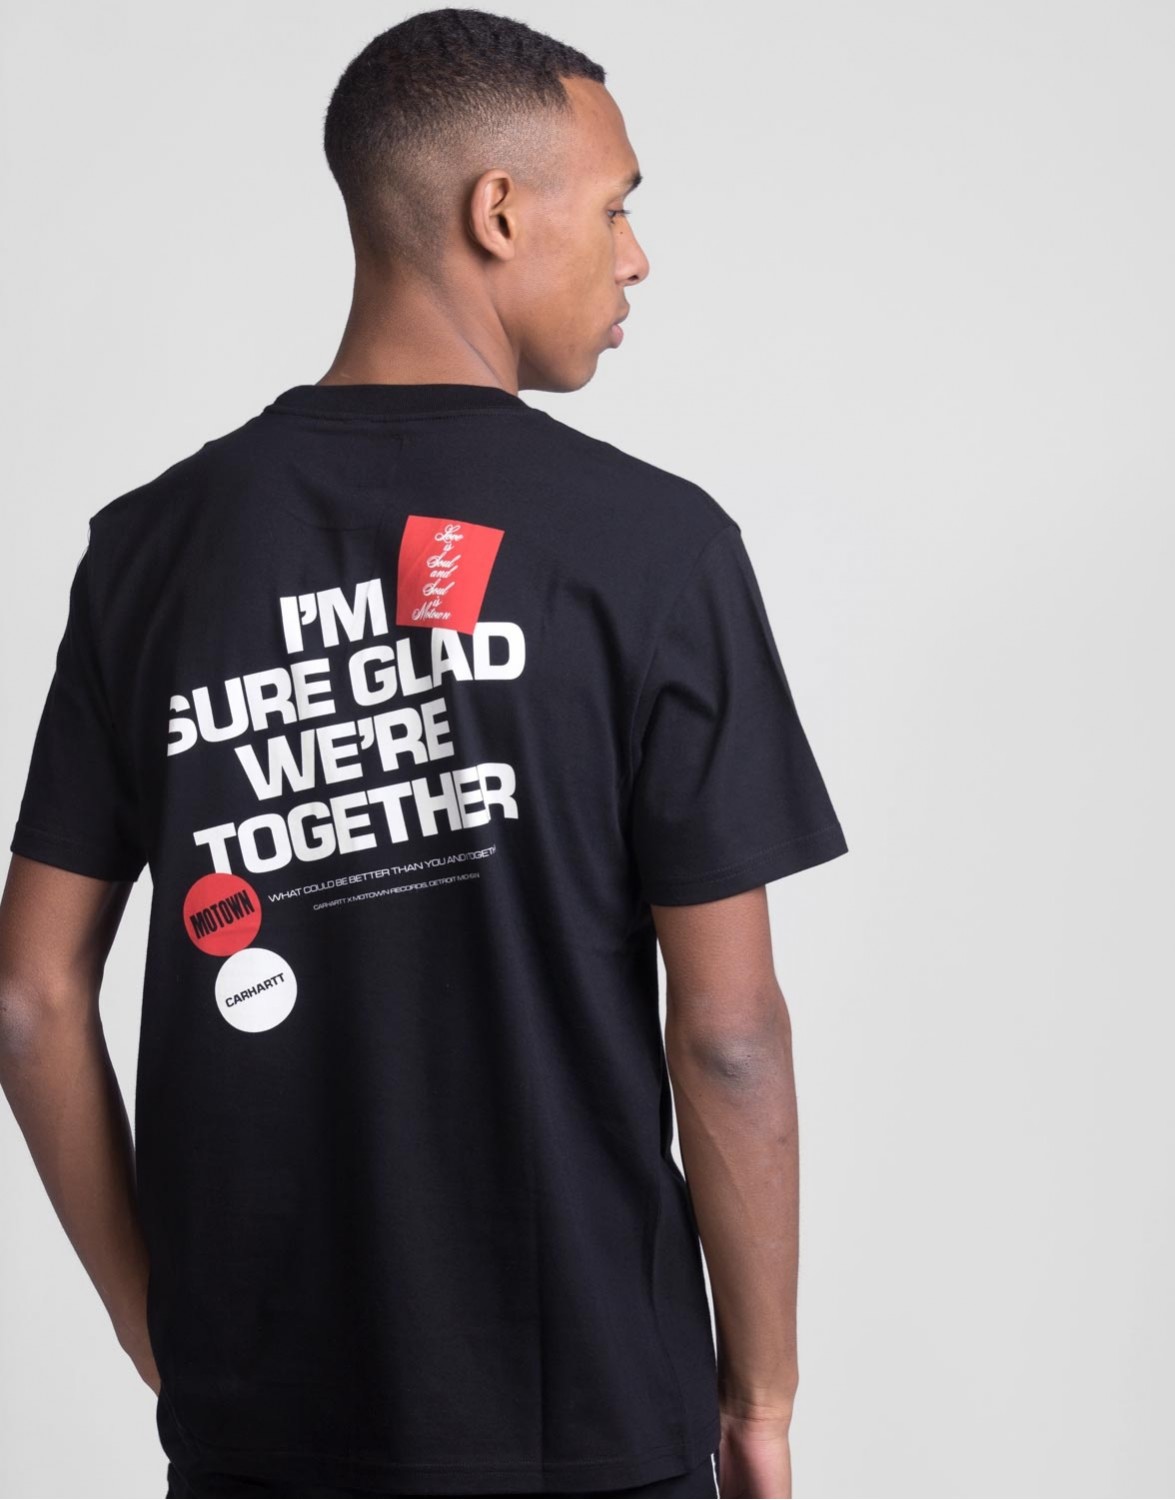 Carhartt S/S Motown Together T-shirt